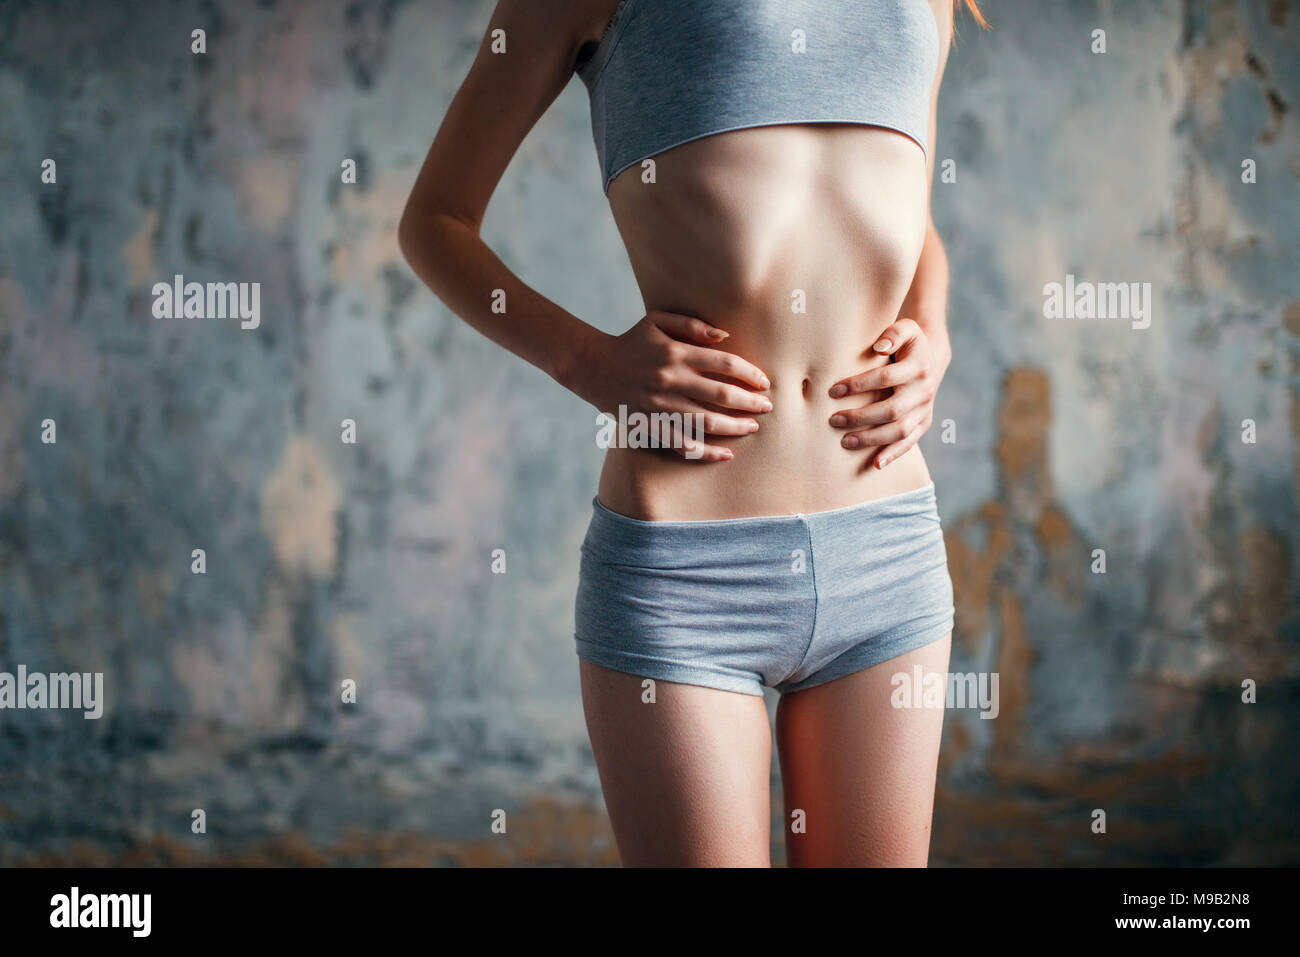 https://c8.alamy.com/comp/M9B2N8/female-with-slim-waist-weight-loss-anorexia-M9B2N8.jpg